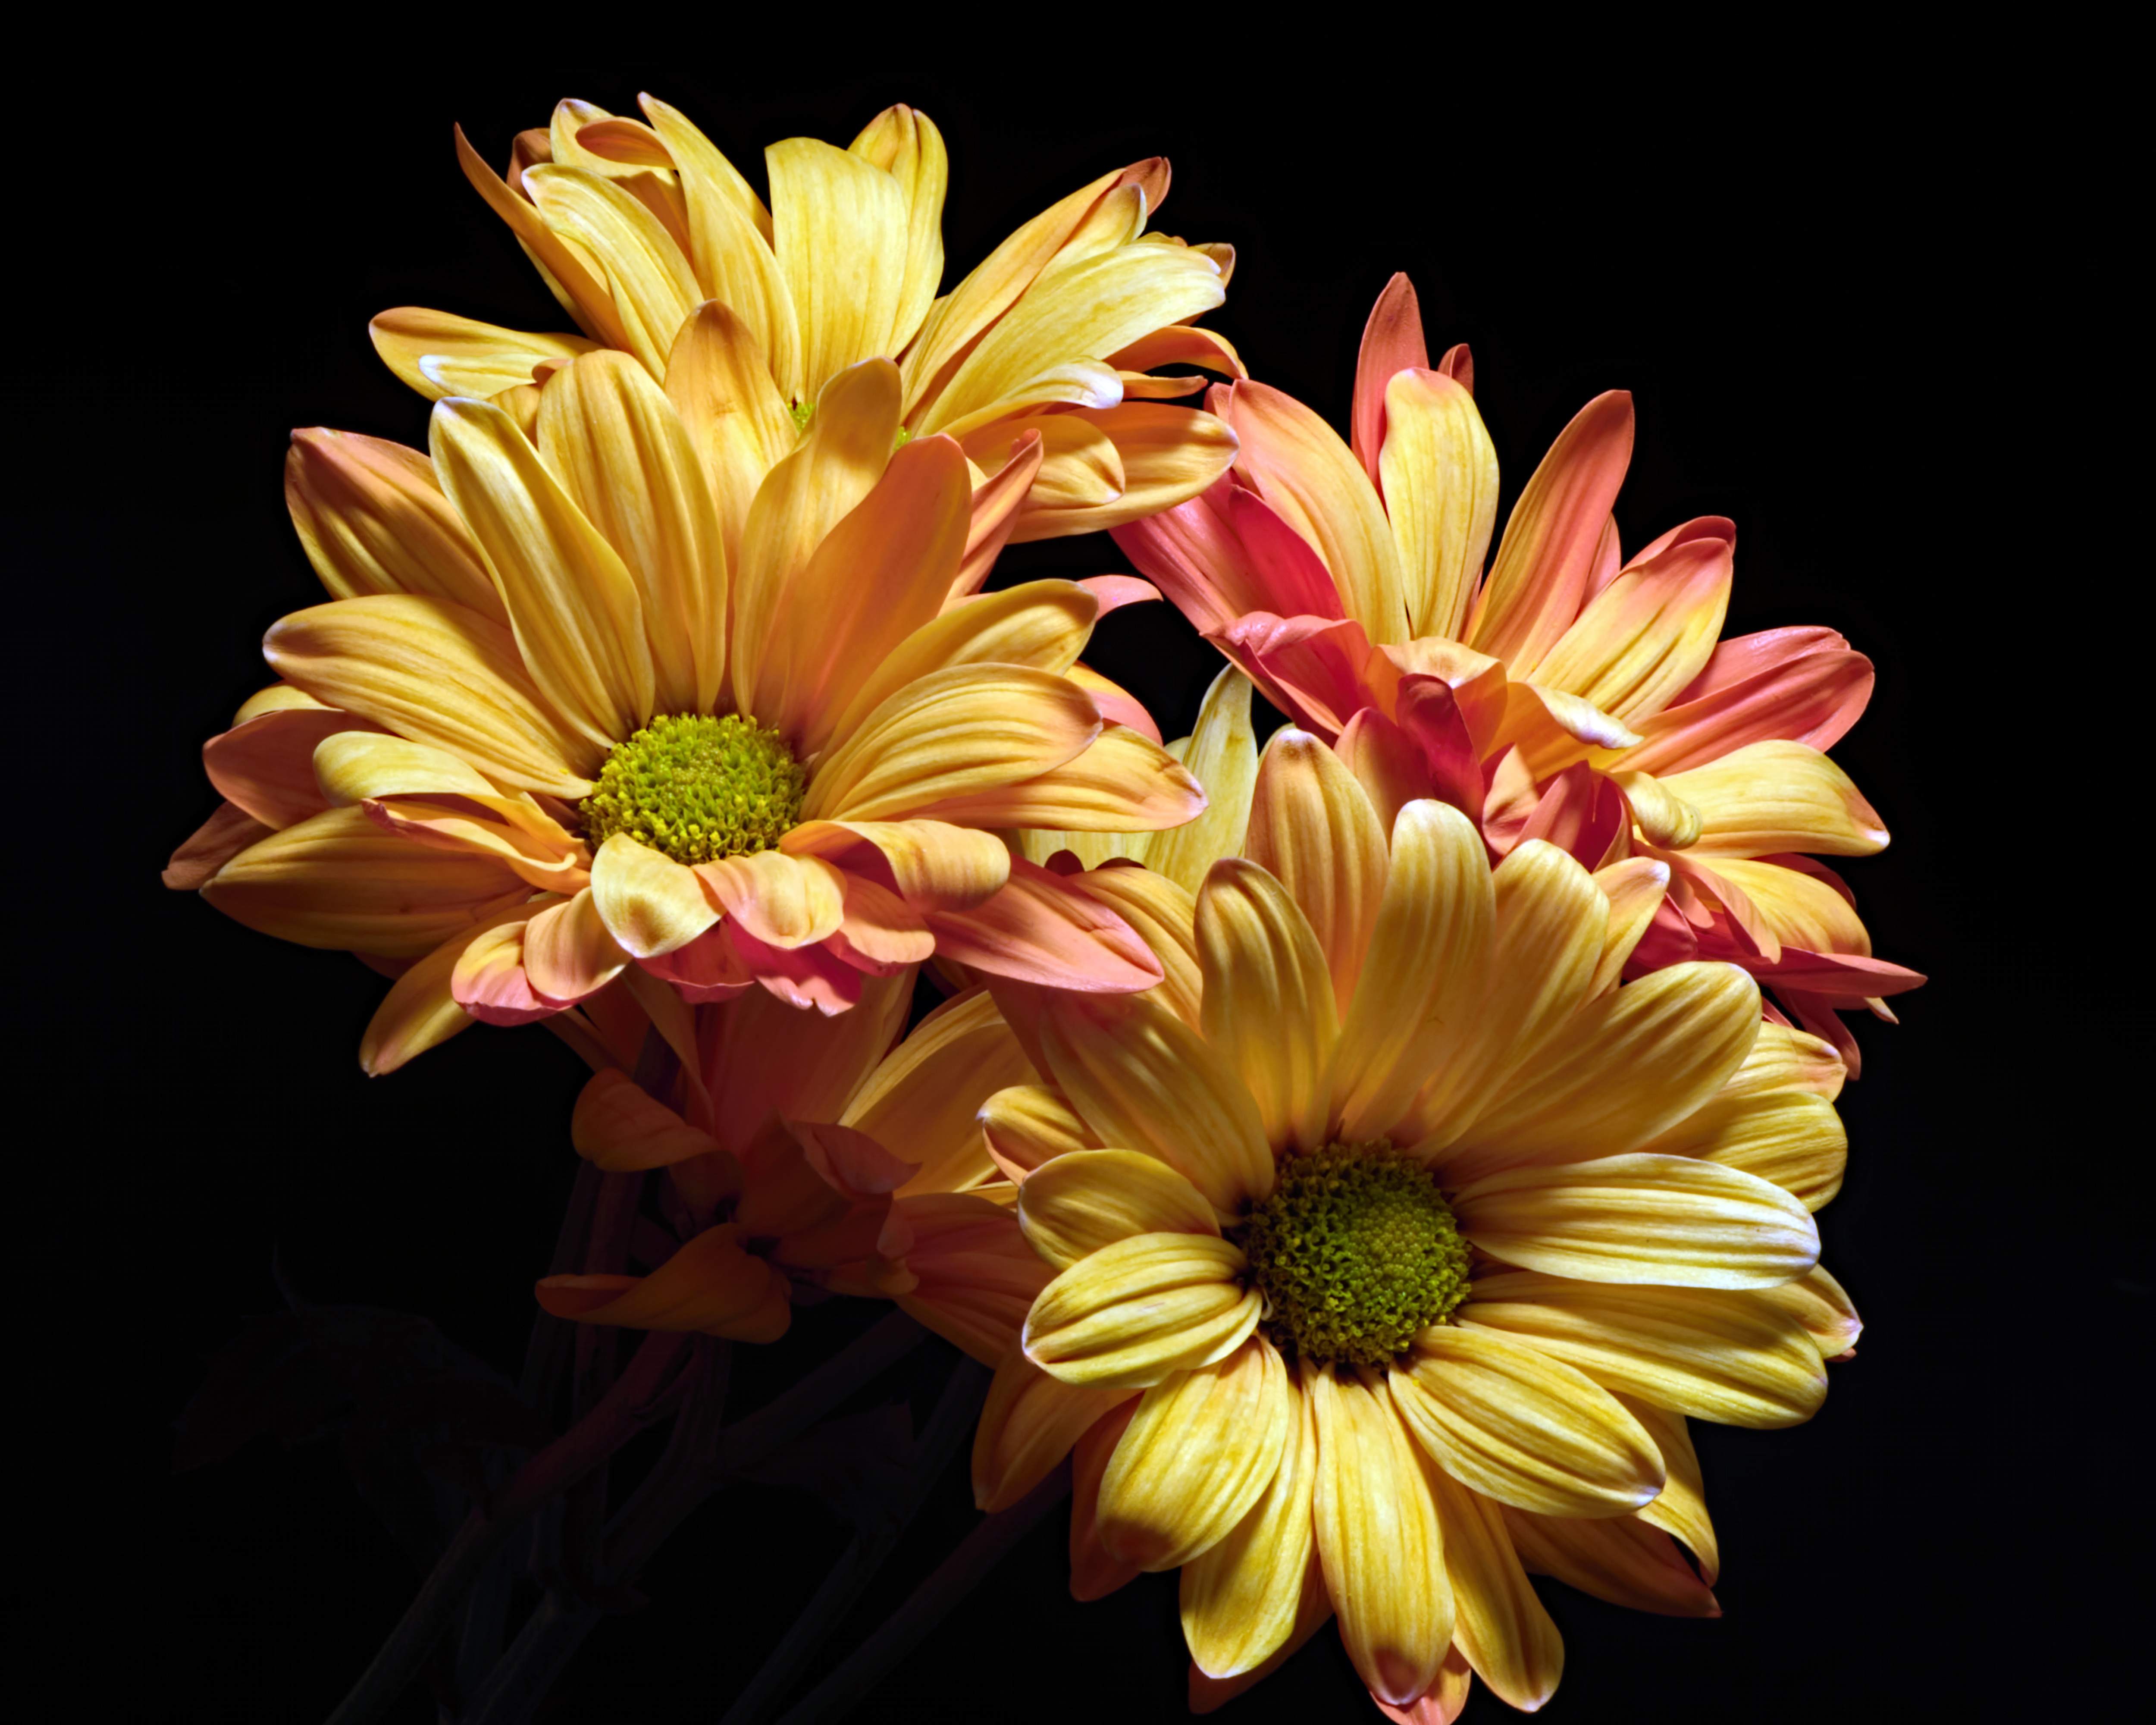 Фото цветок хризантемы макросъемка - бесплатные картинки на Fonwall